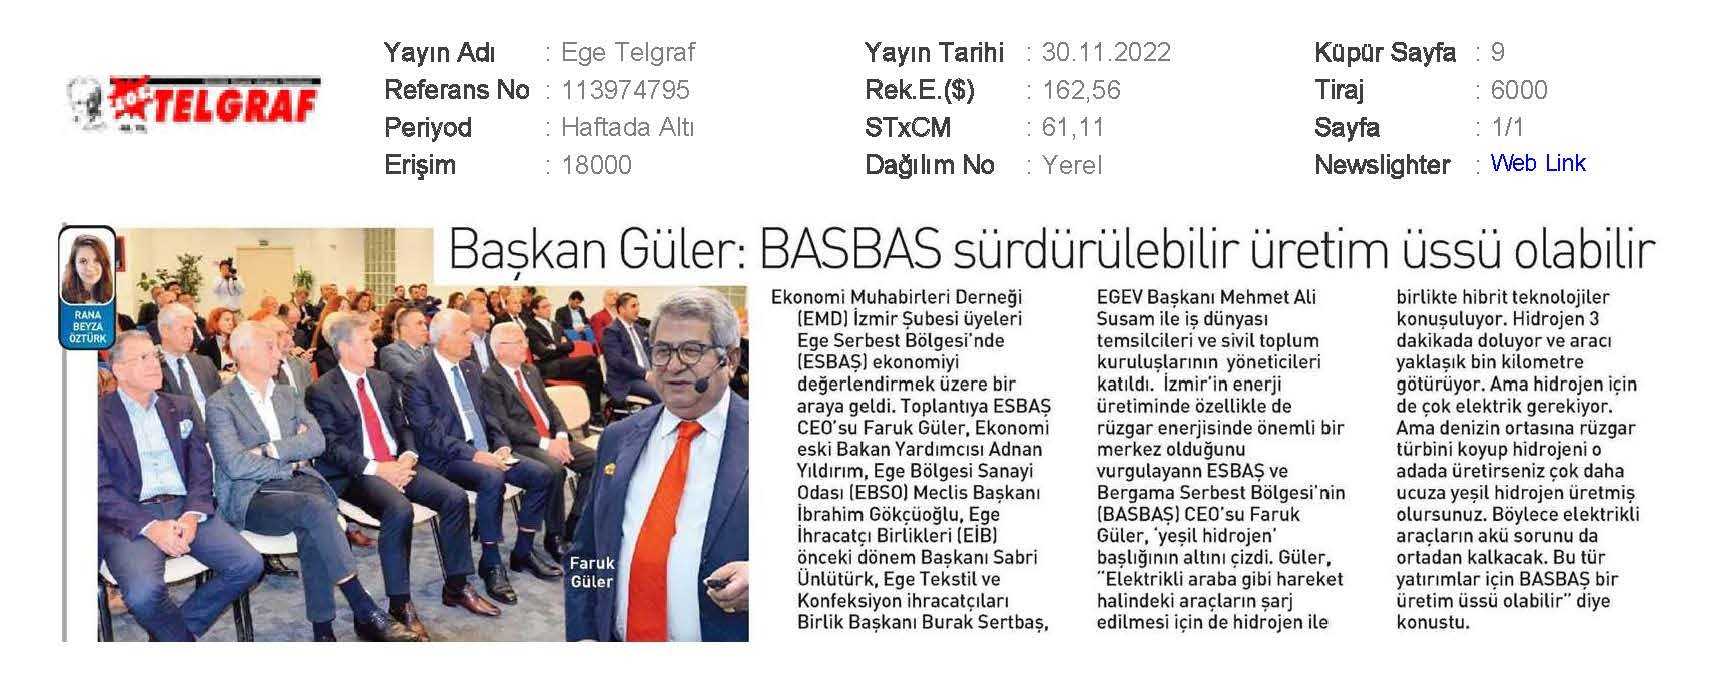 CEO FARUK GÜLER: BASBAŞ COULD BECOME A SUSTAINABLE PRODUCTION HUB